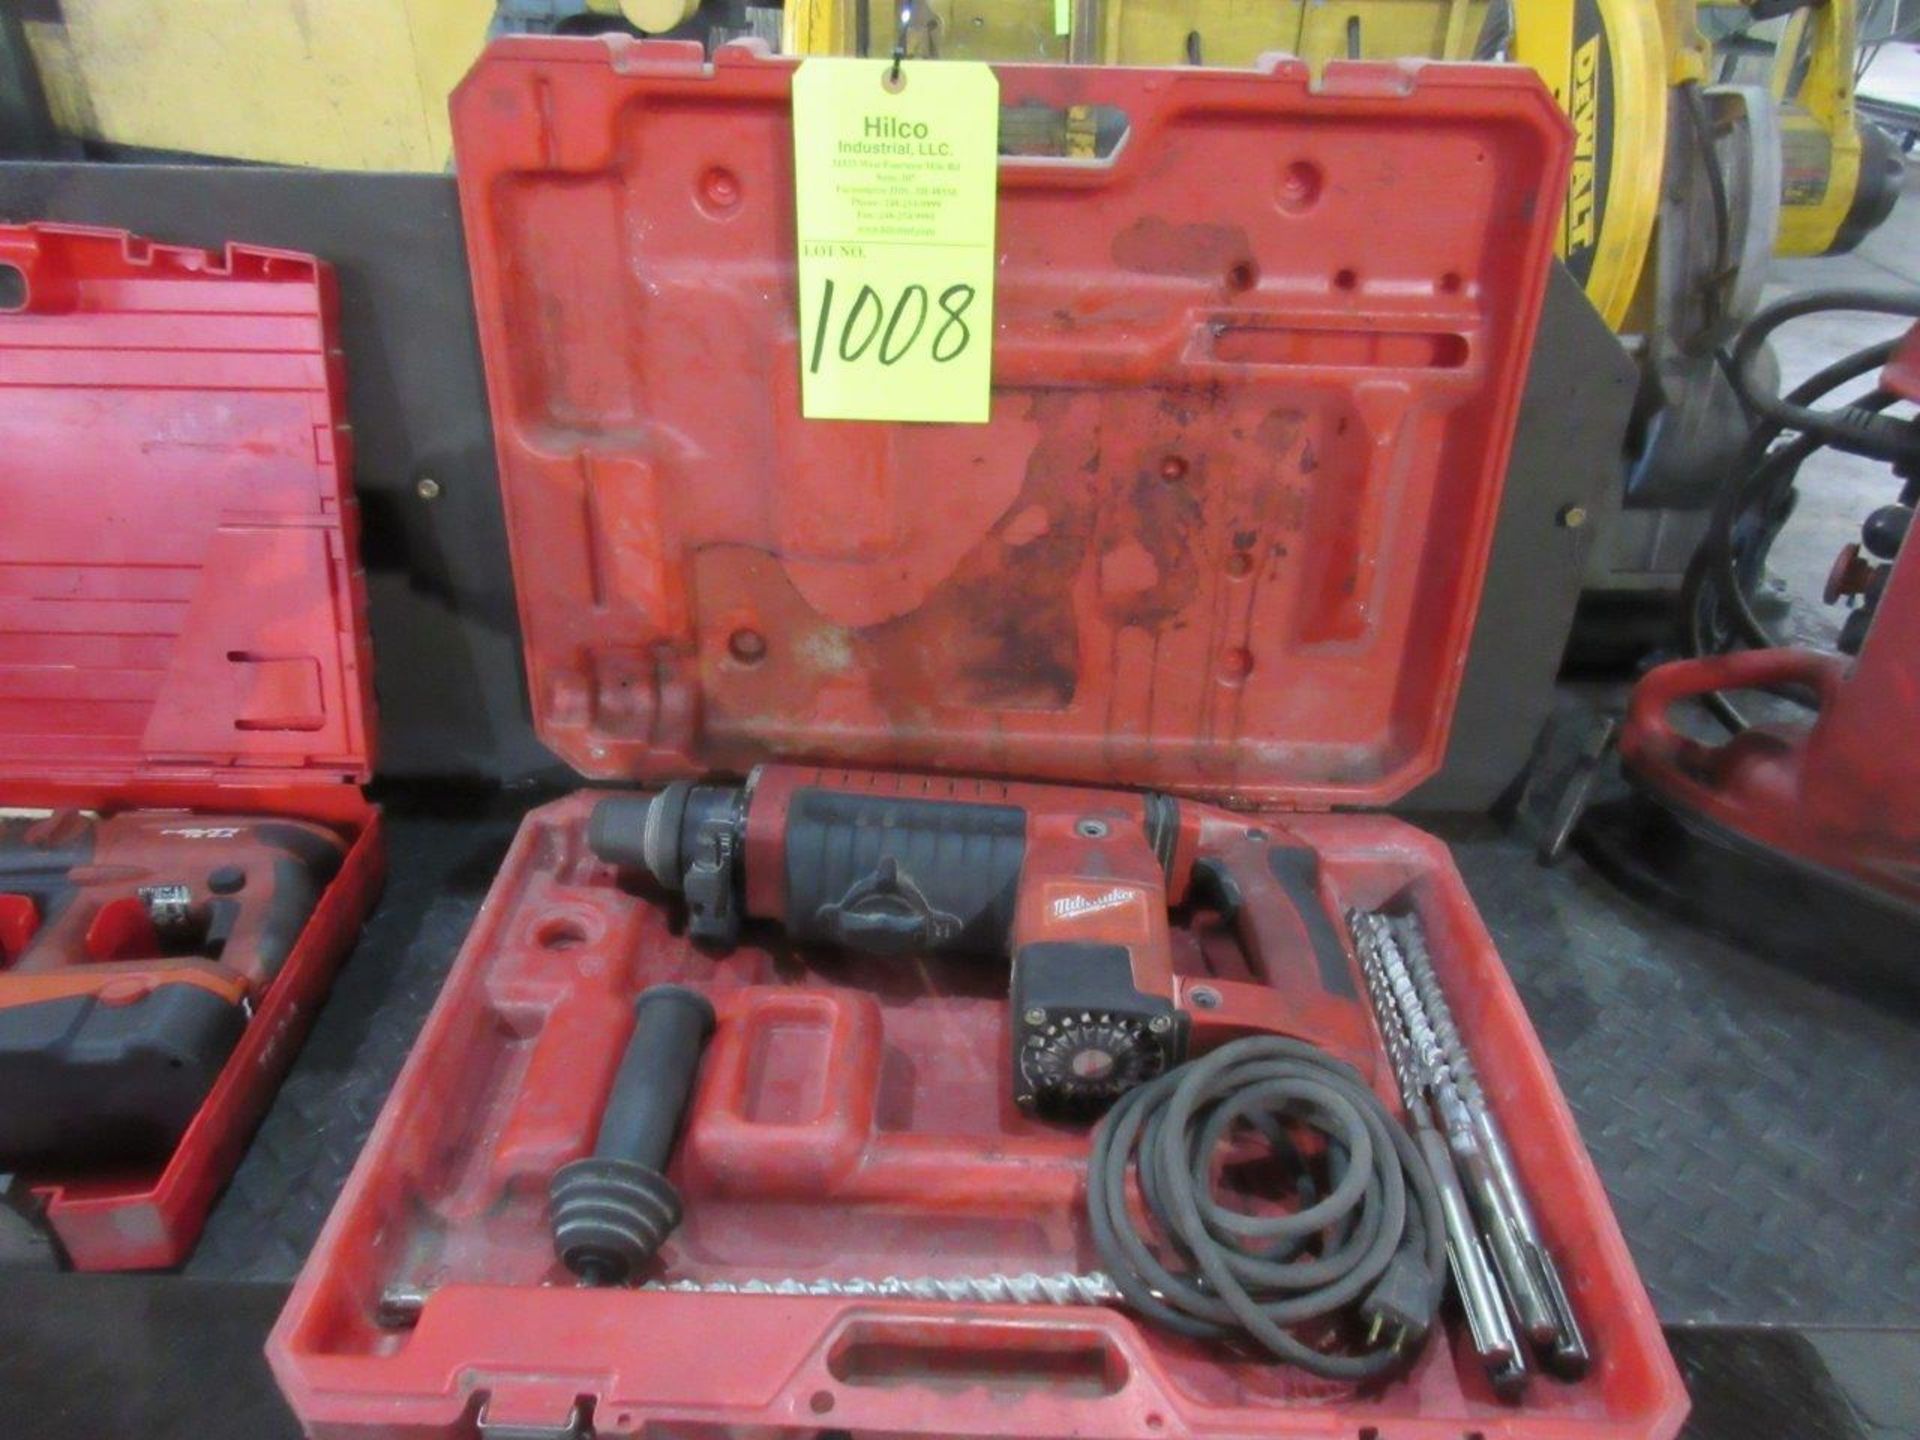 Hilti Model 5346-21 1 3/4" Rotary Hammer Drill